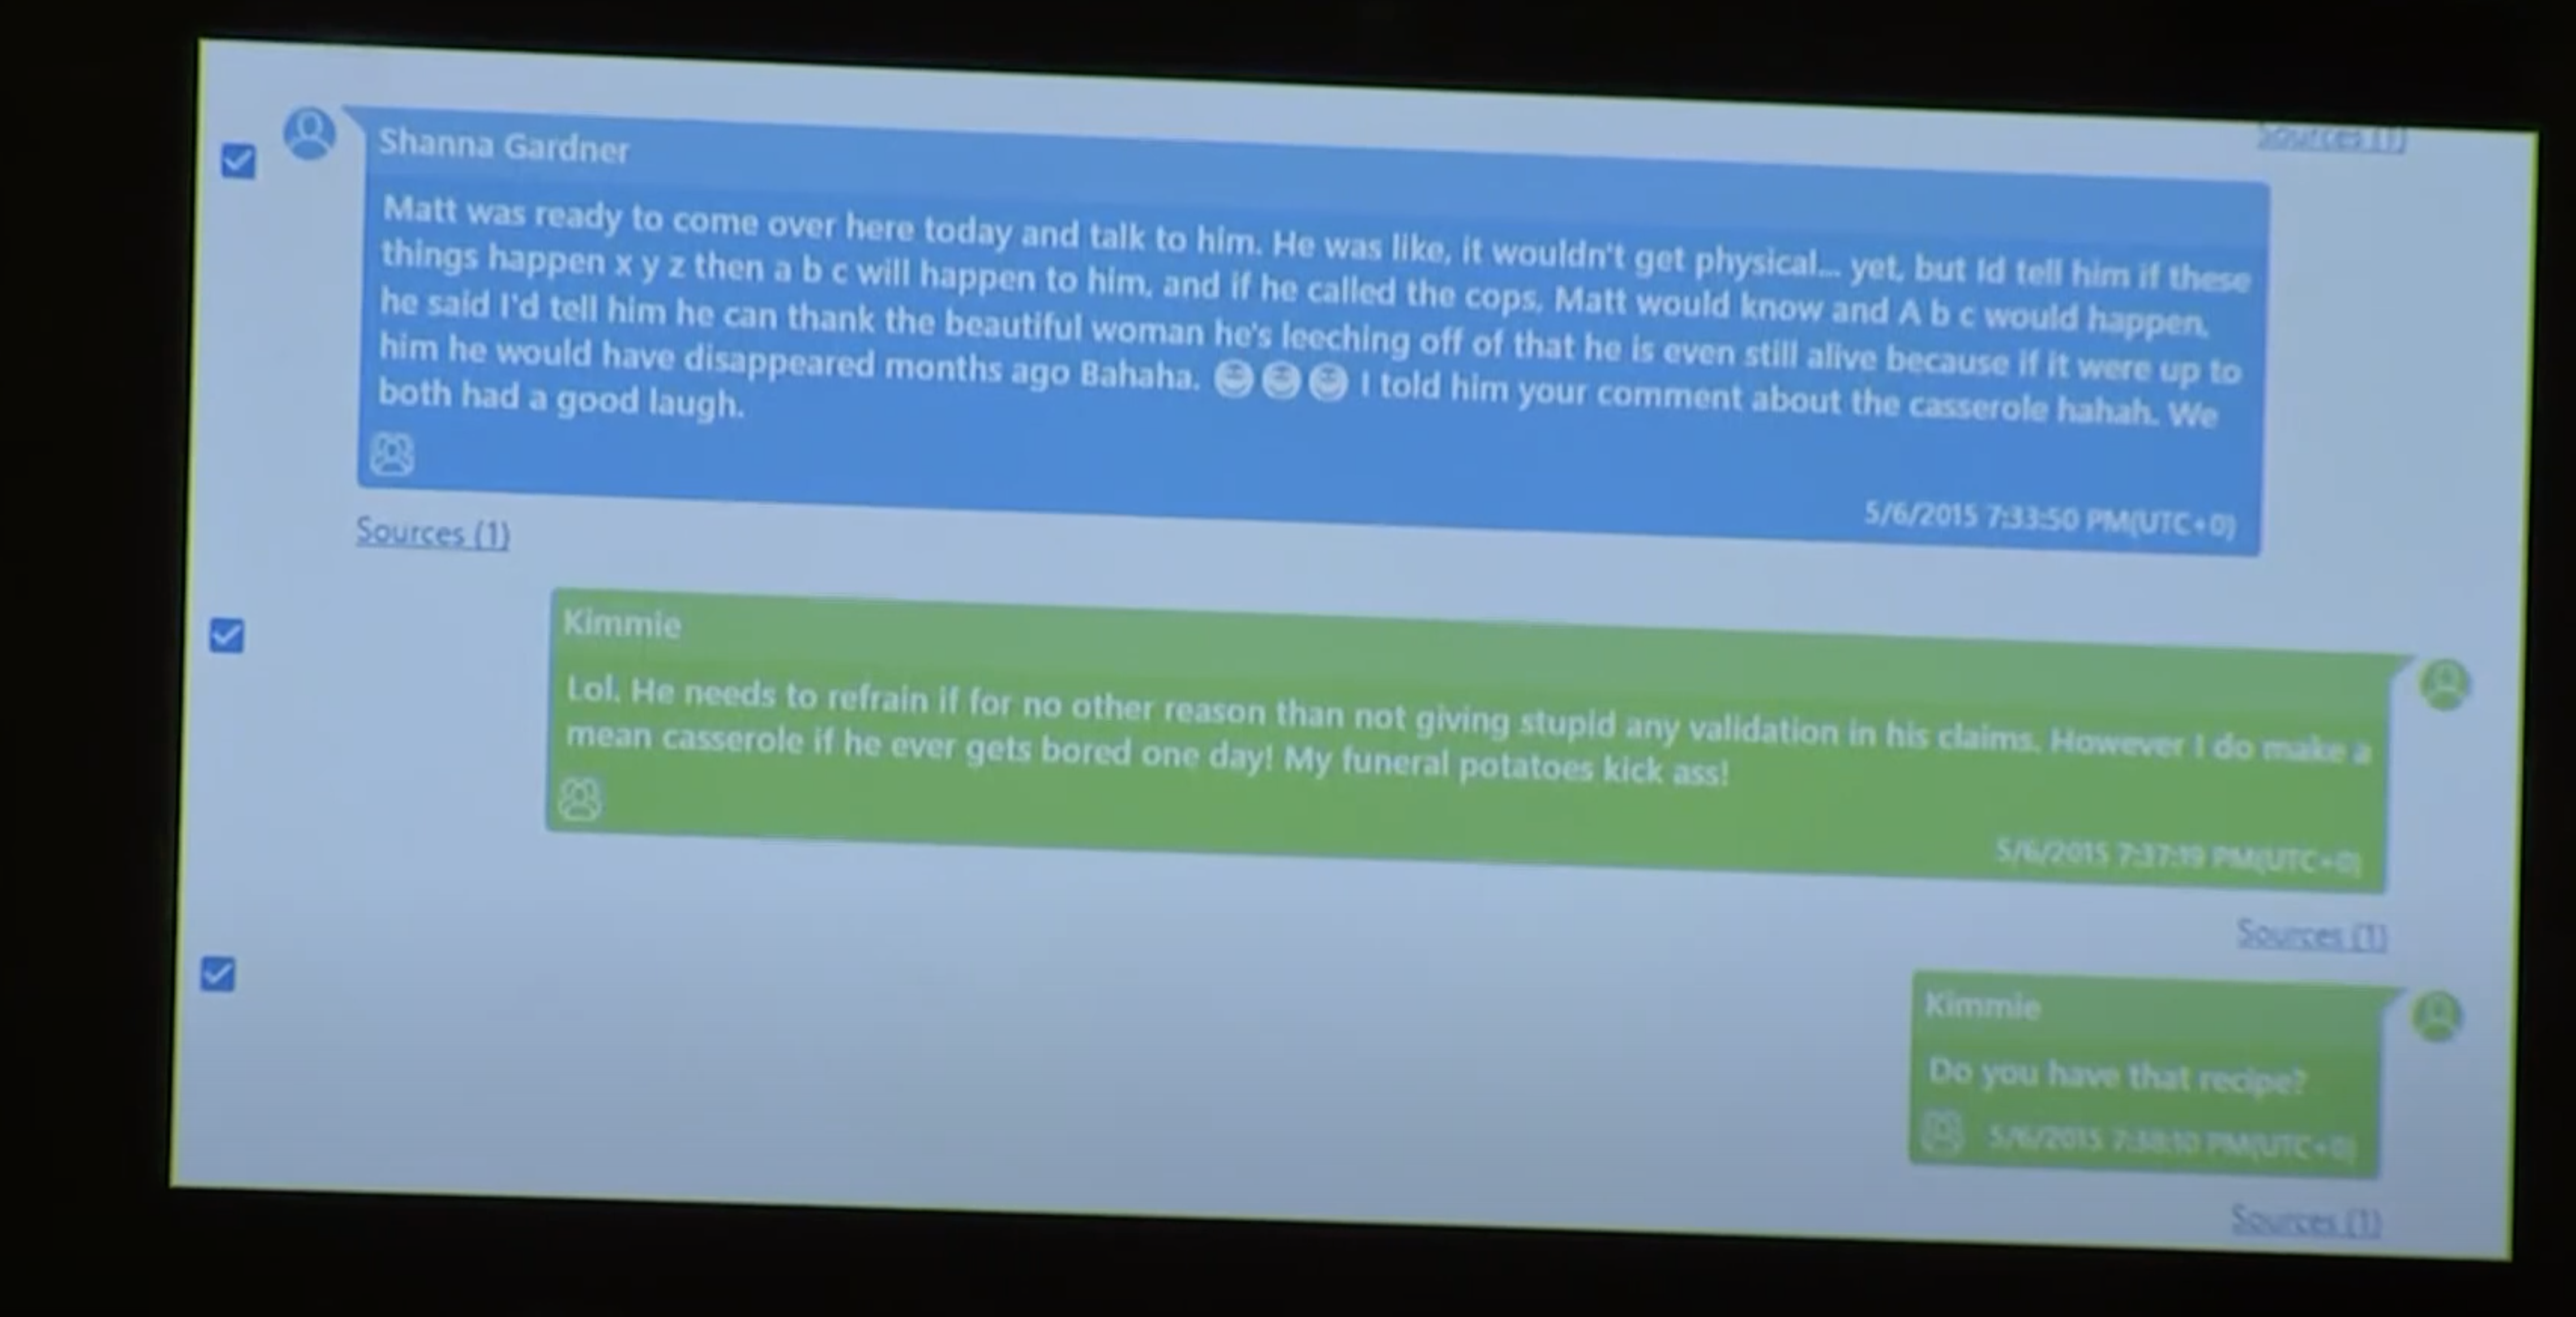 Shanna Gardner and Kim Jensen 2015 text exhibit (YouTube/First Coast News screengrab)